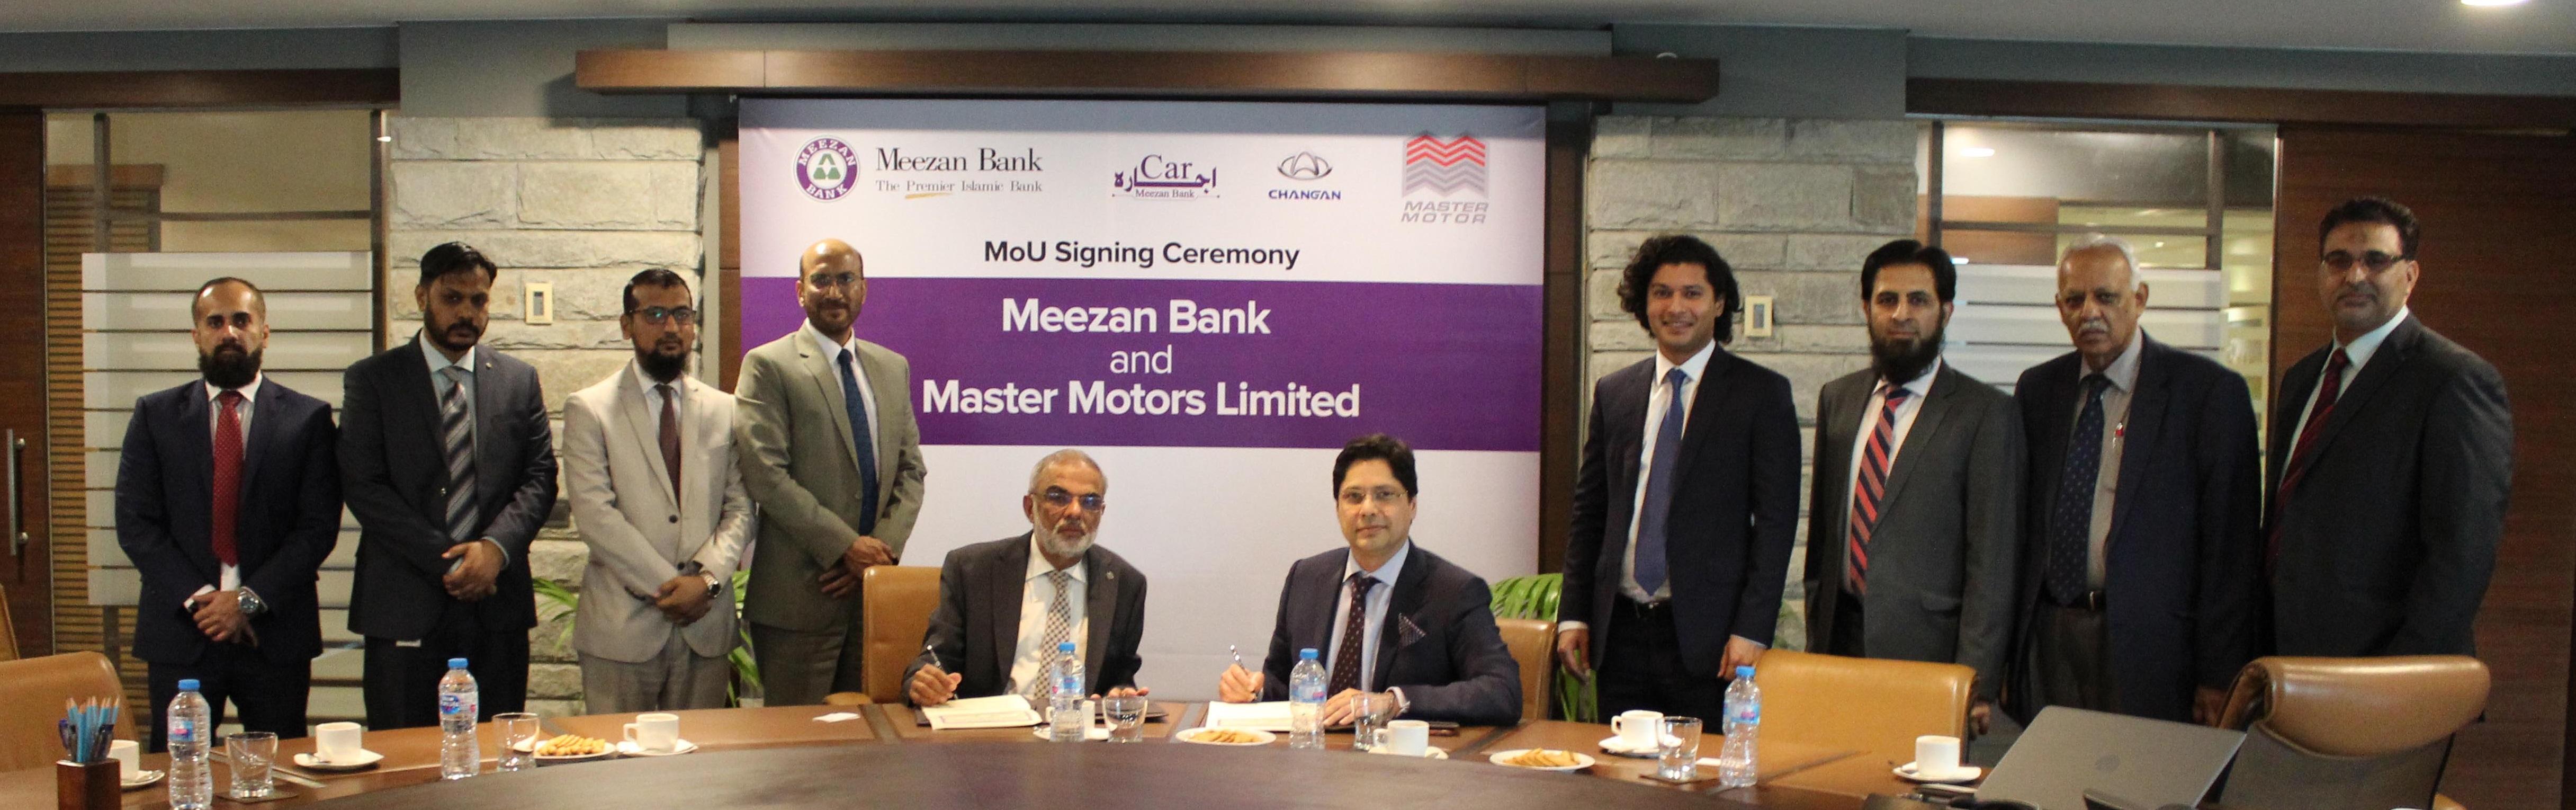 Meezan Bank and Master Motors Limited sign a Memorandum of Understanding for Promoting Master Motors Limited – Changan